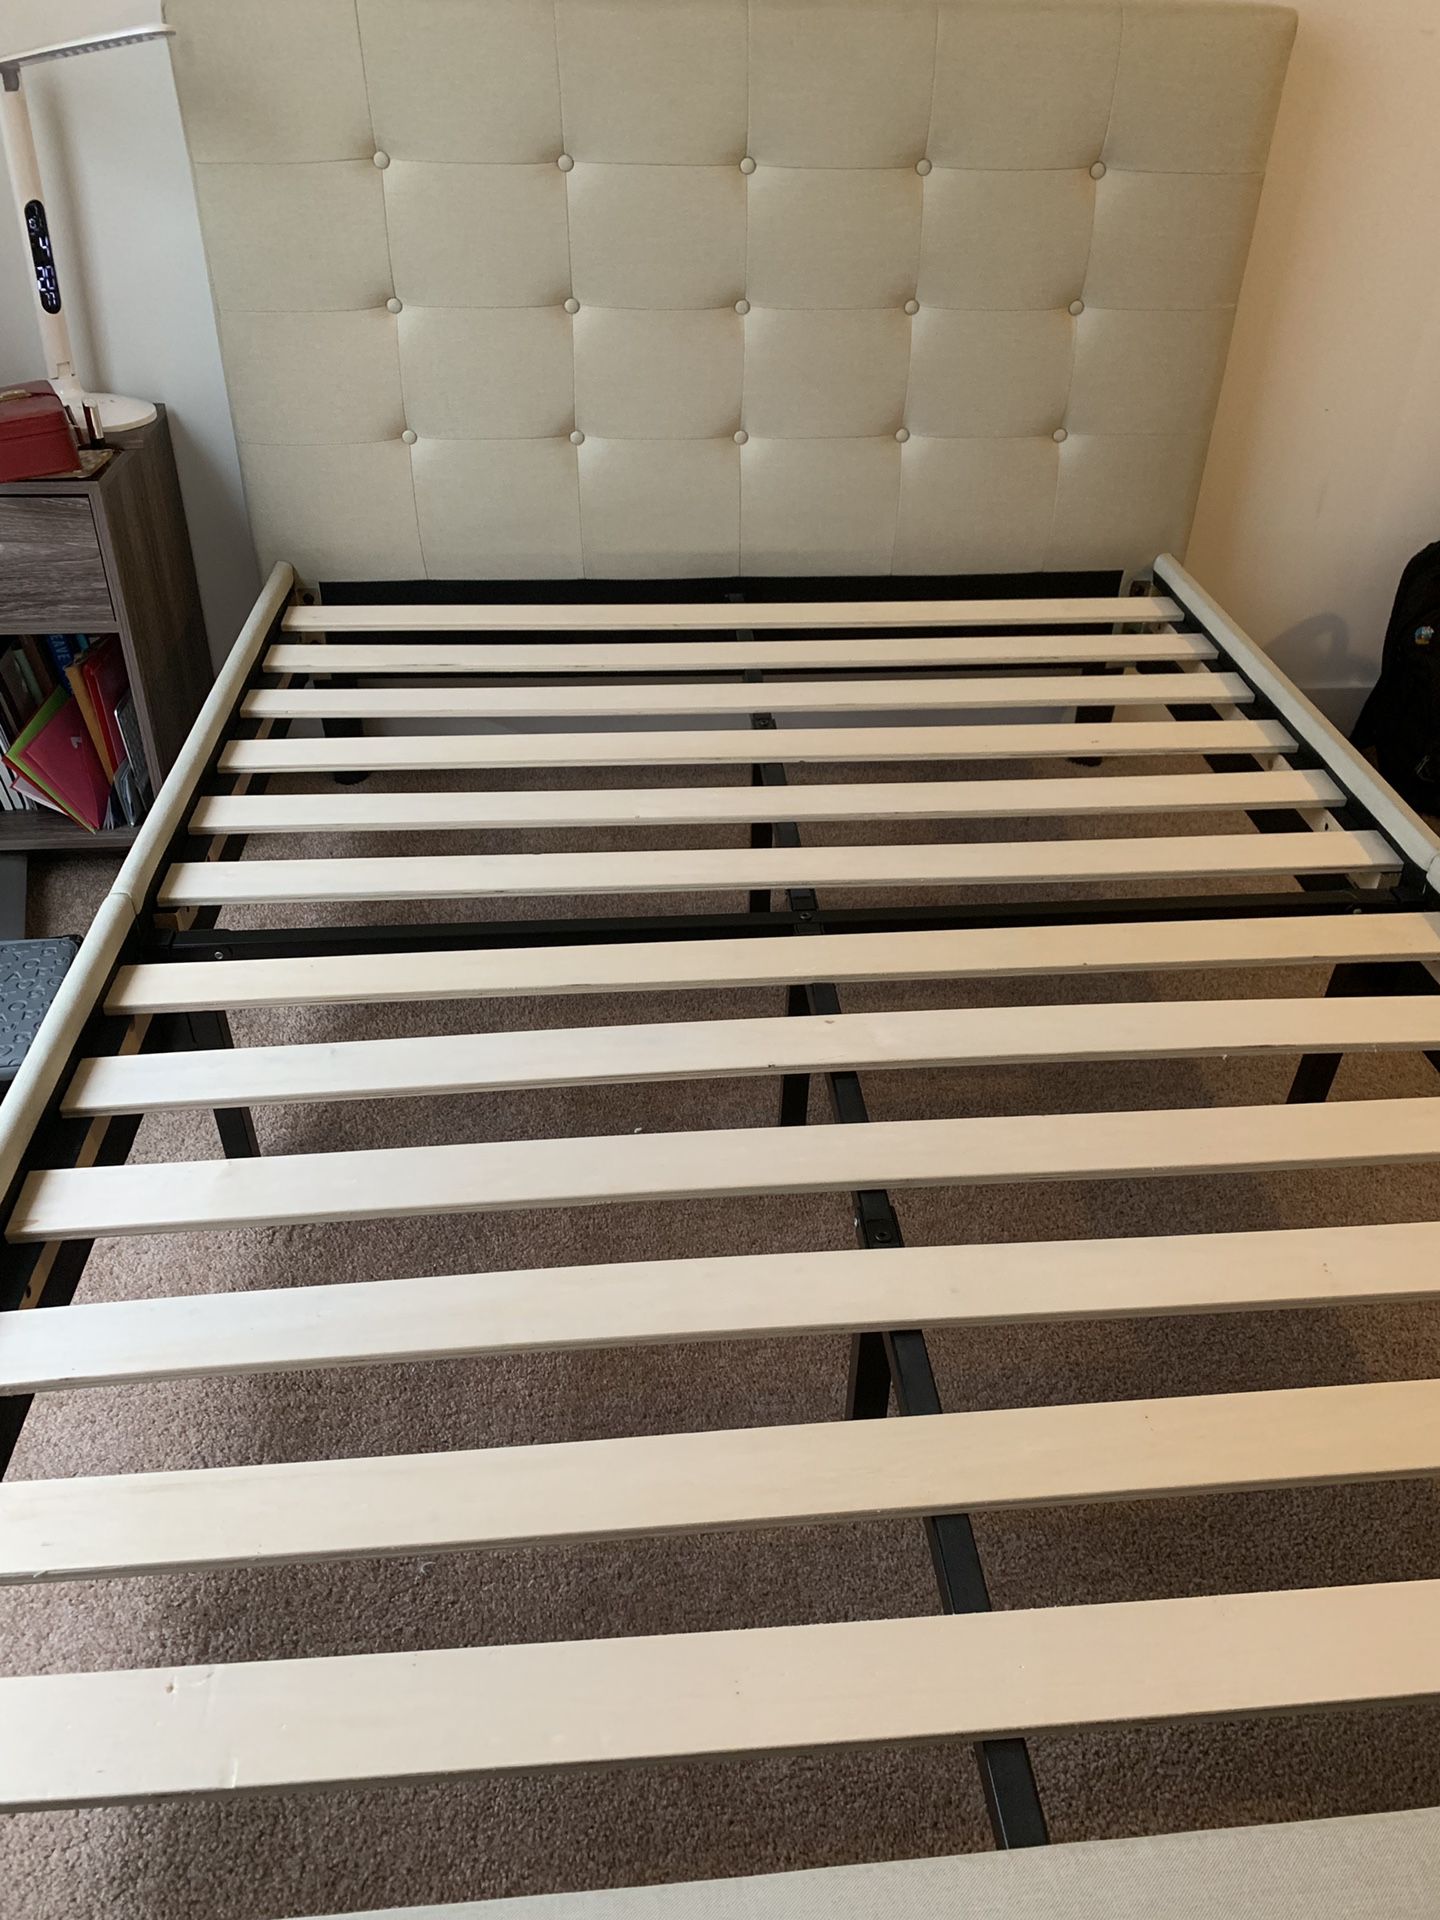 Full sized platform bed